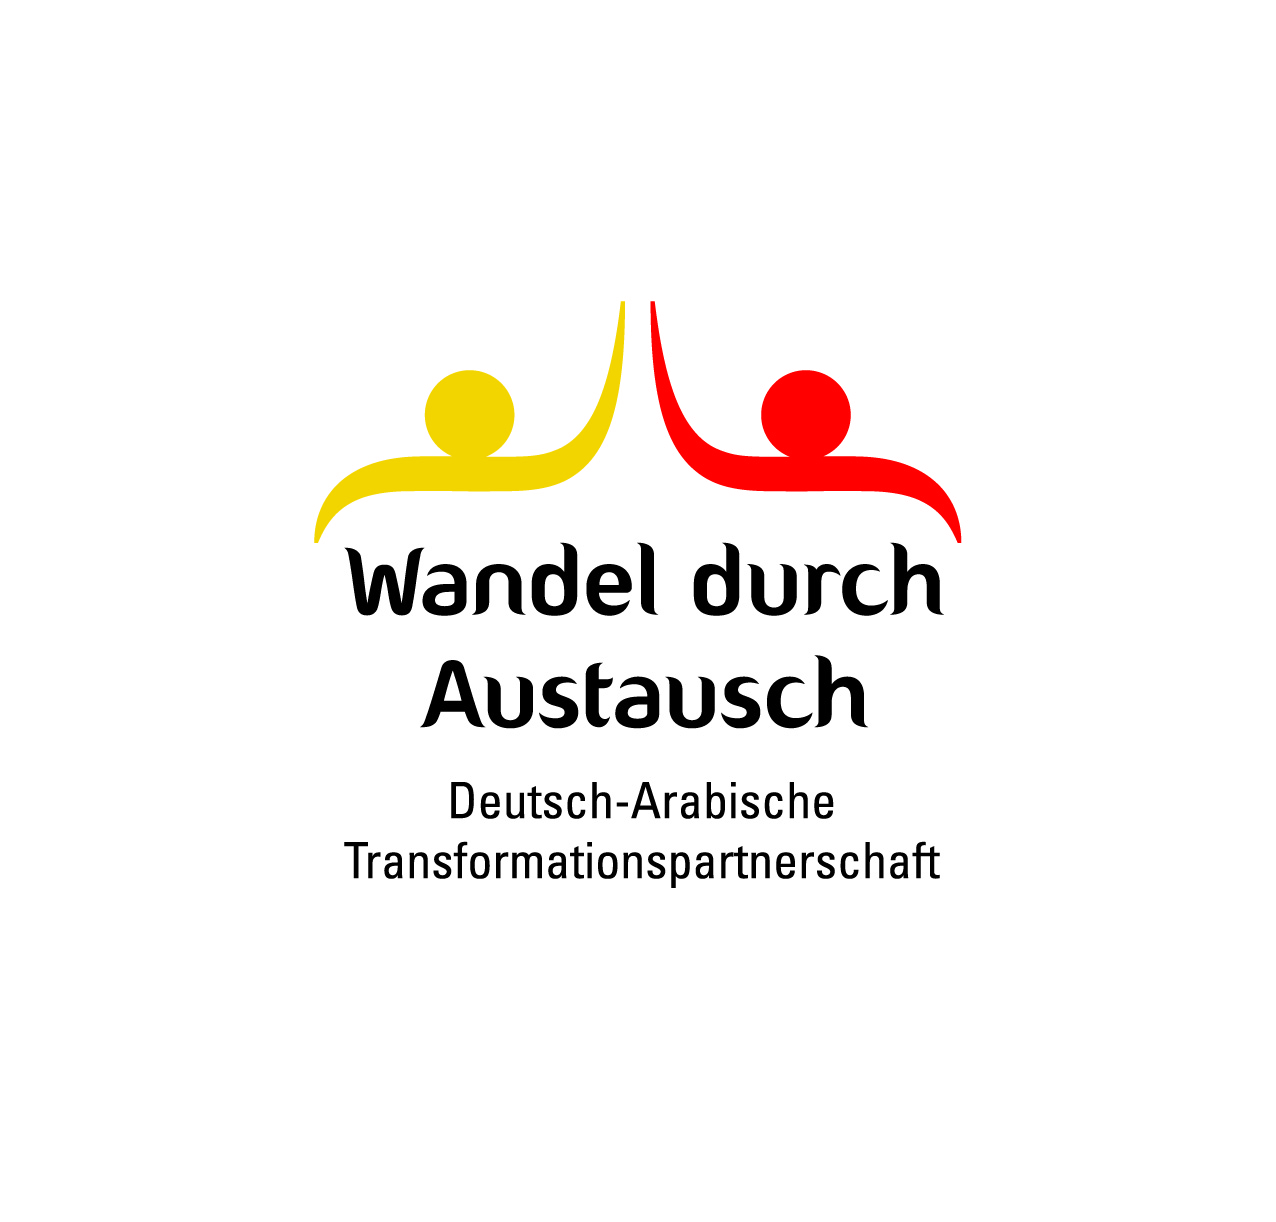 daad_wandeldurchaustausch_logo_4c.jpg